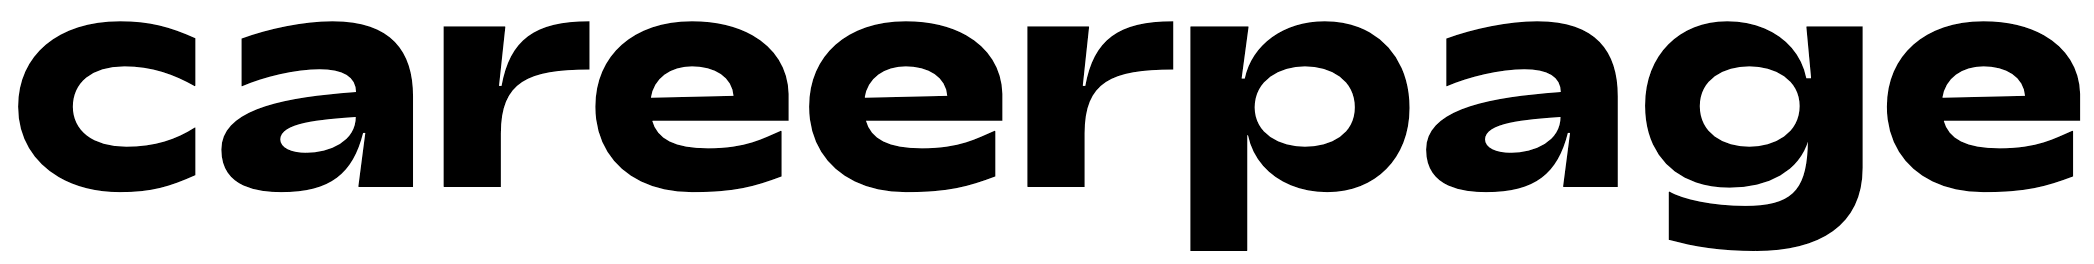 Careerpage logo